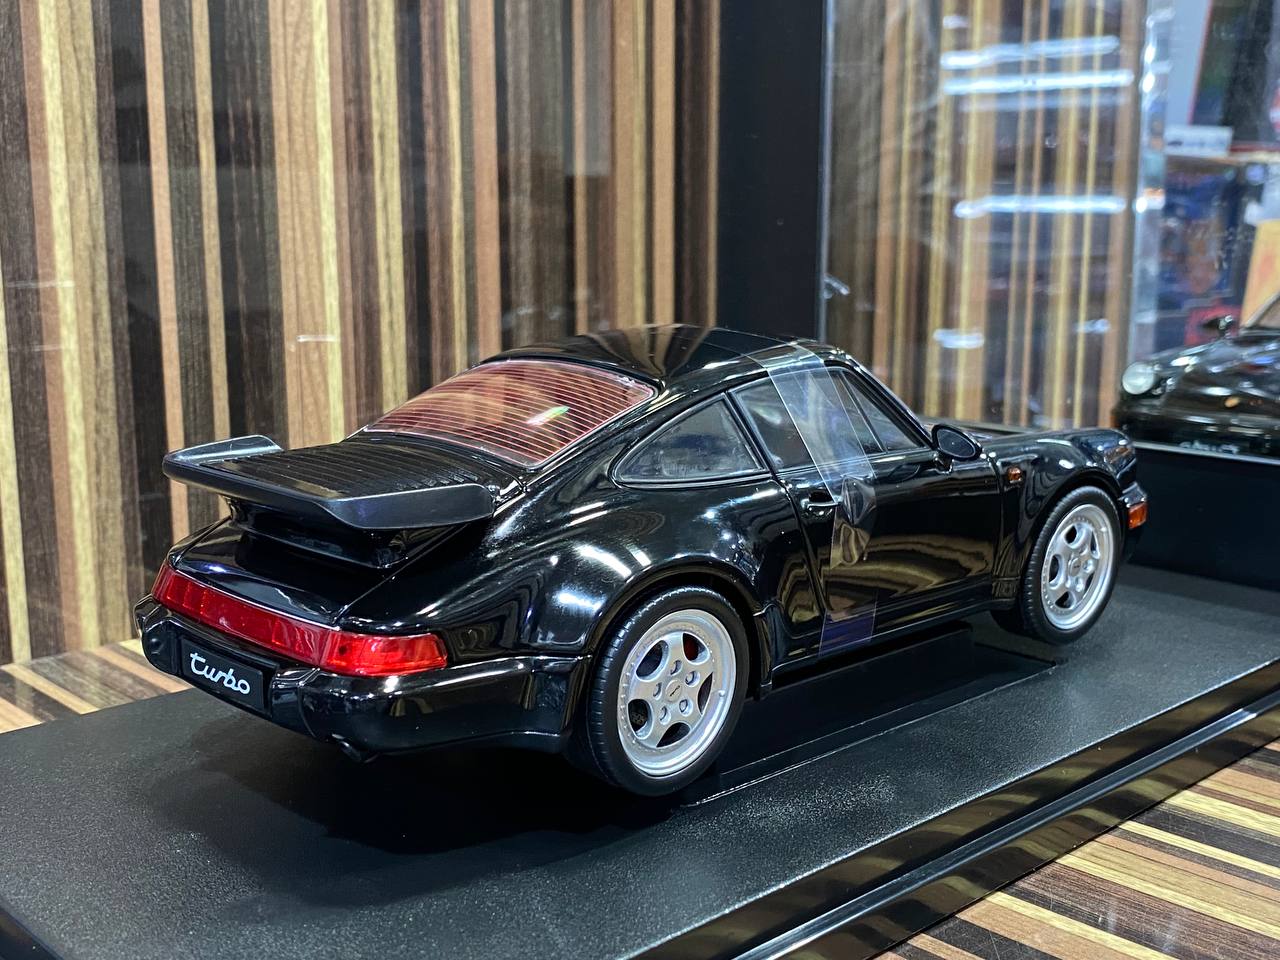 1/18 Welly Metal Diecast - Porsche 964 Turbo in Sleek Black|Sold in Dturman.com Dubai UAE.